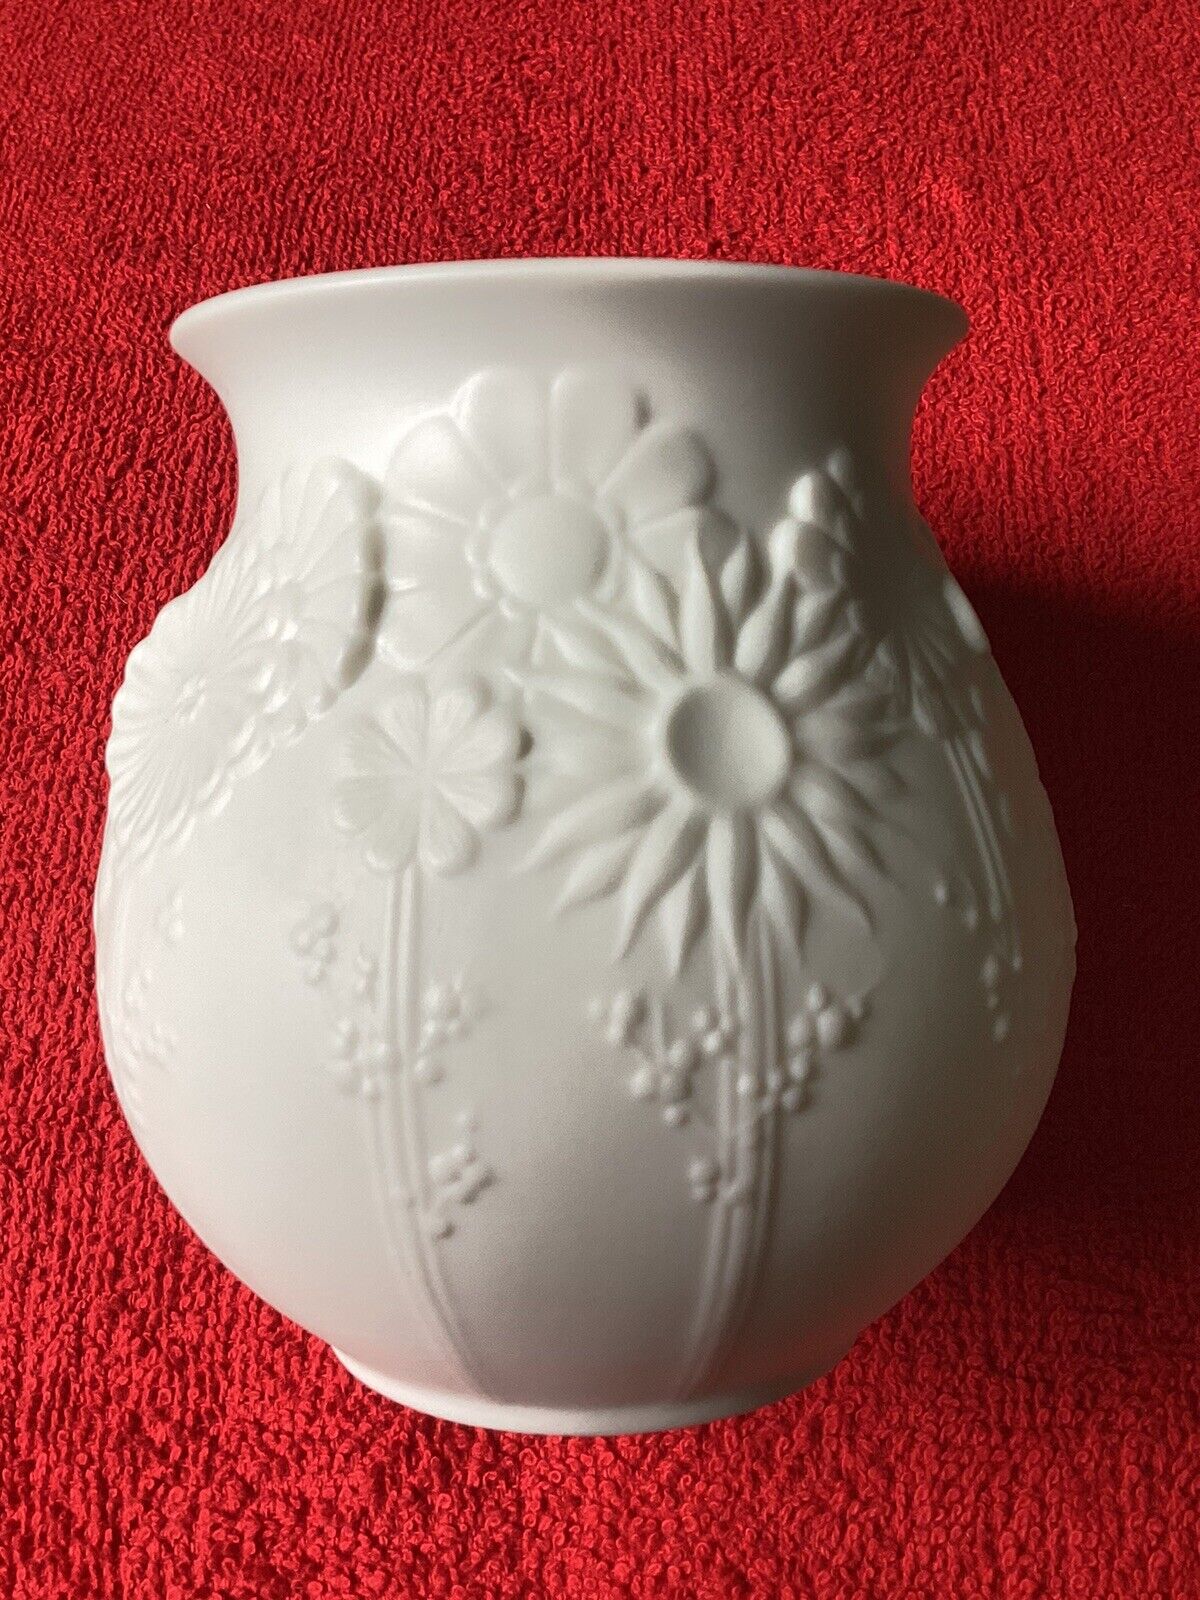 KAISER Bisque Porcelain Vase with Decorative Flowers #497